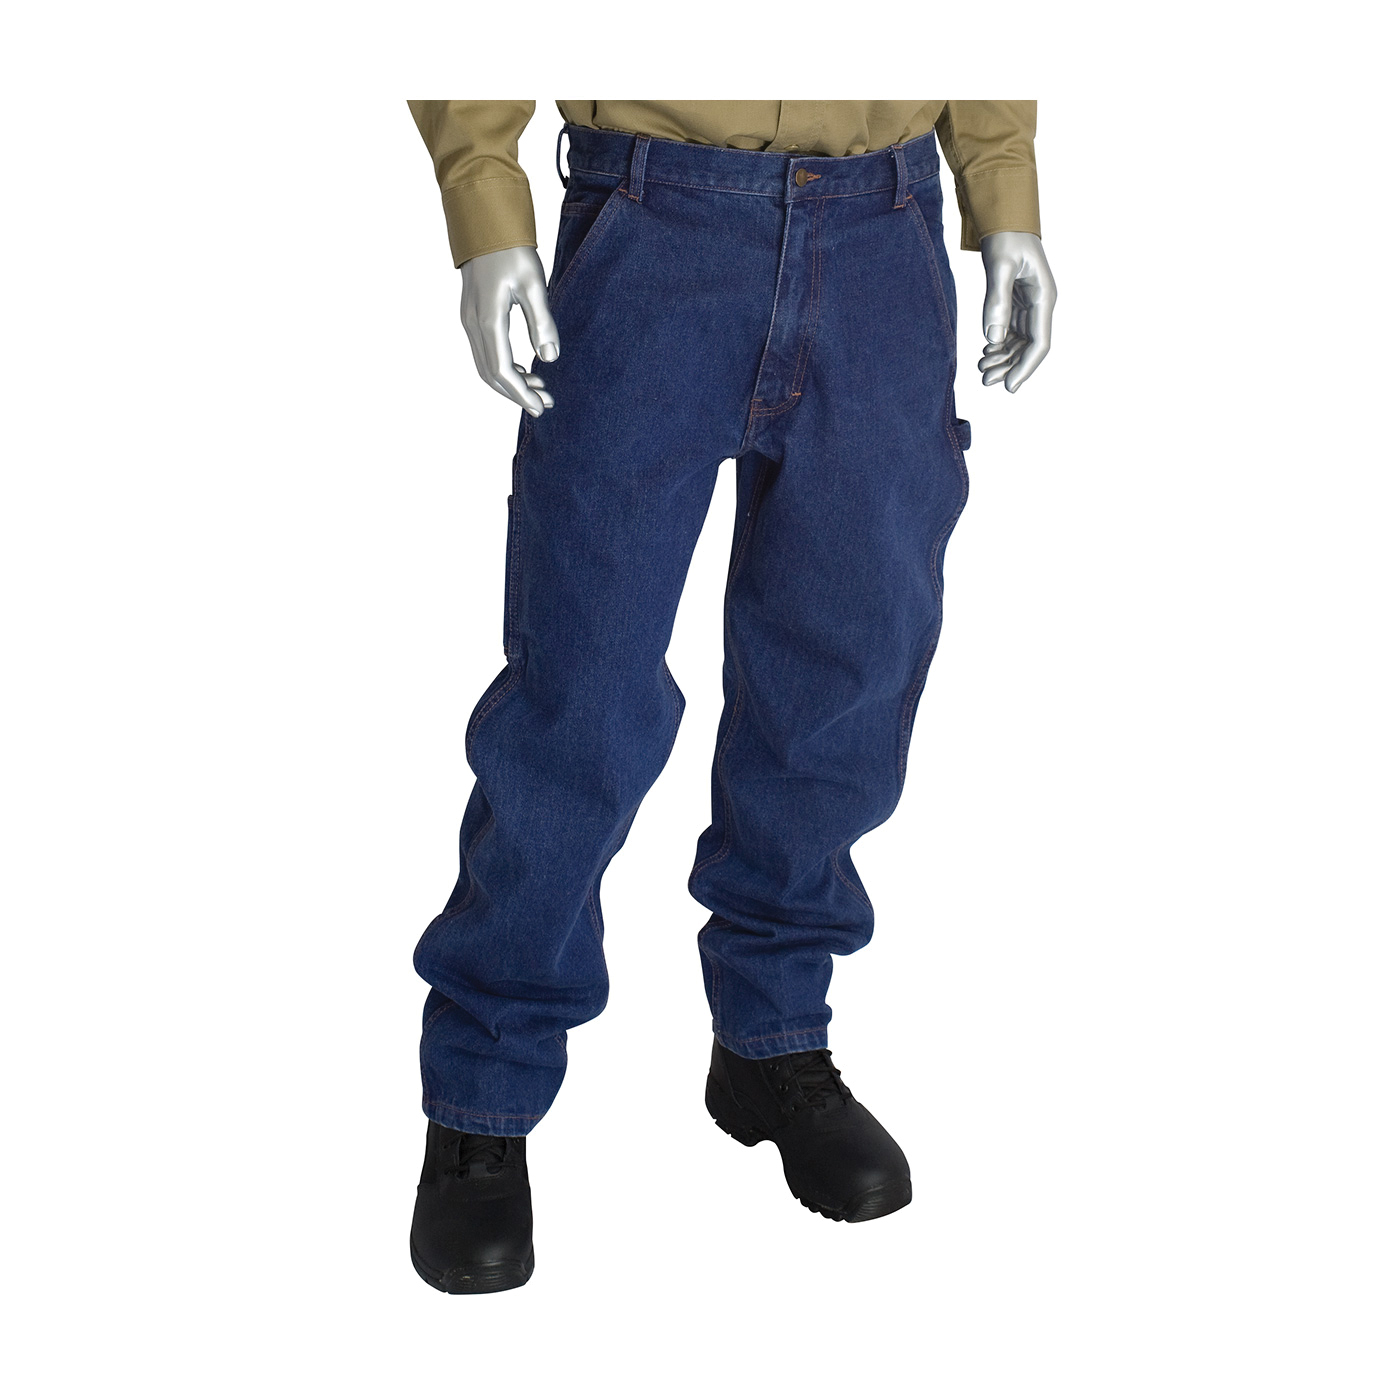 PIP® 385-FRCJ-4430 Carpenter Jeans, 44 in Waist, 30 in L Inseam, Blue Denim, Cotton